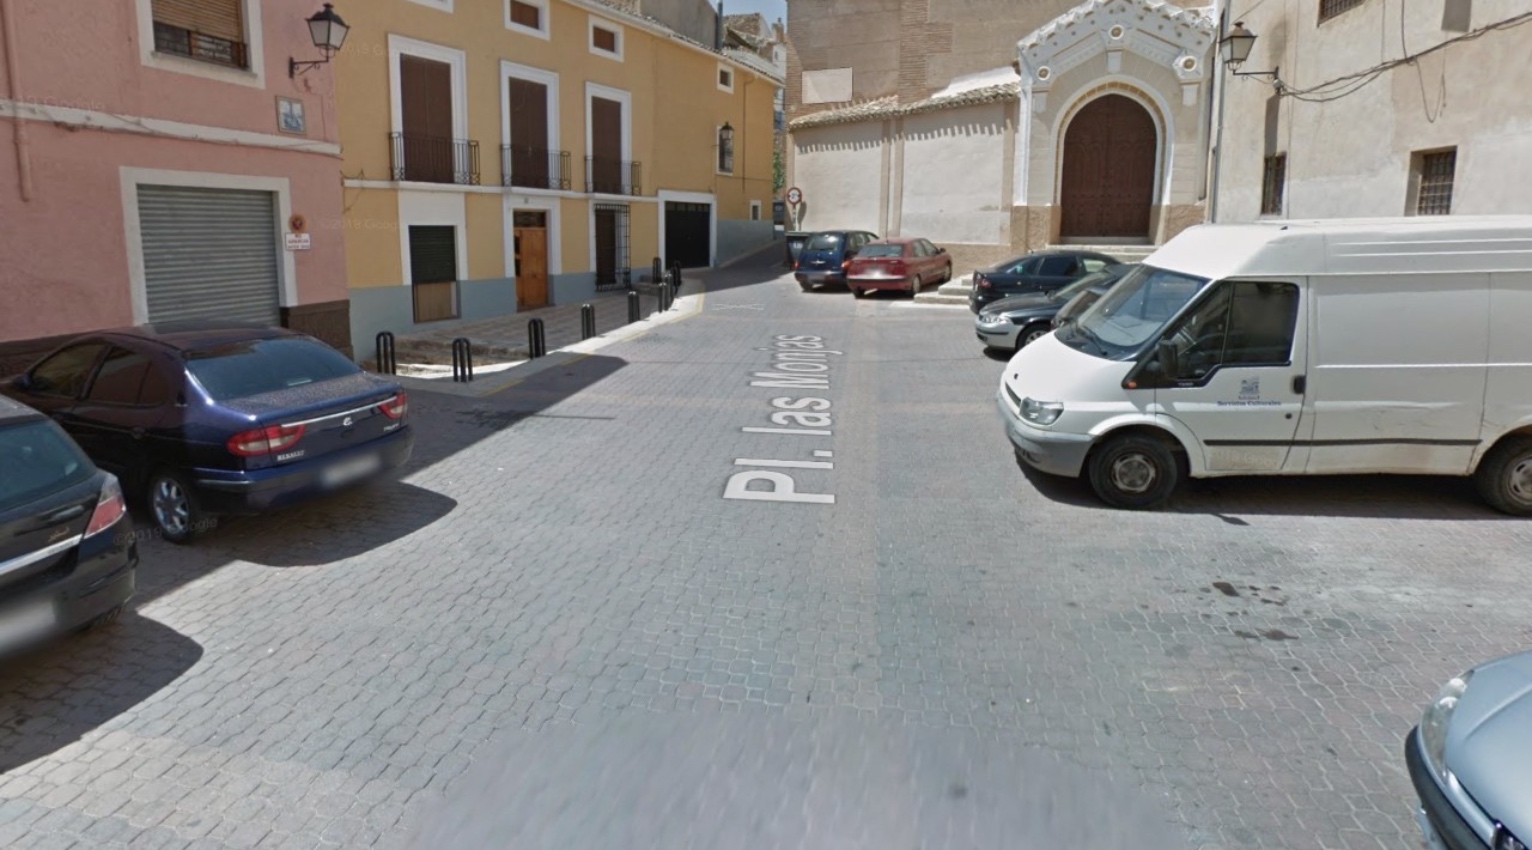 Imagen de Google Maps de la Plaza Las Monjas de Hellín, Albacete.